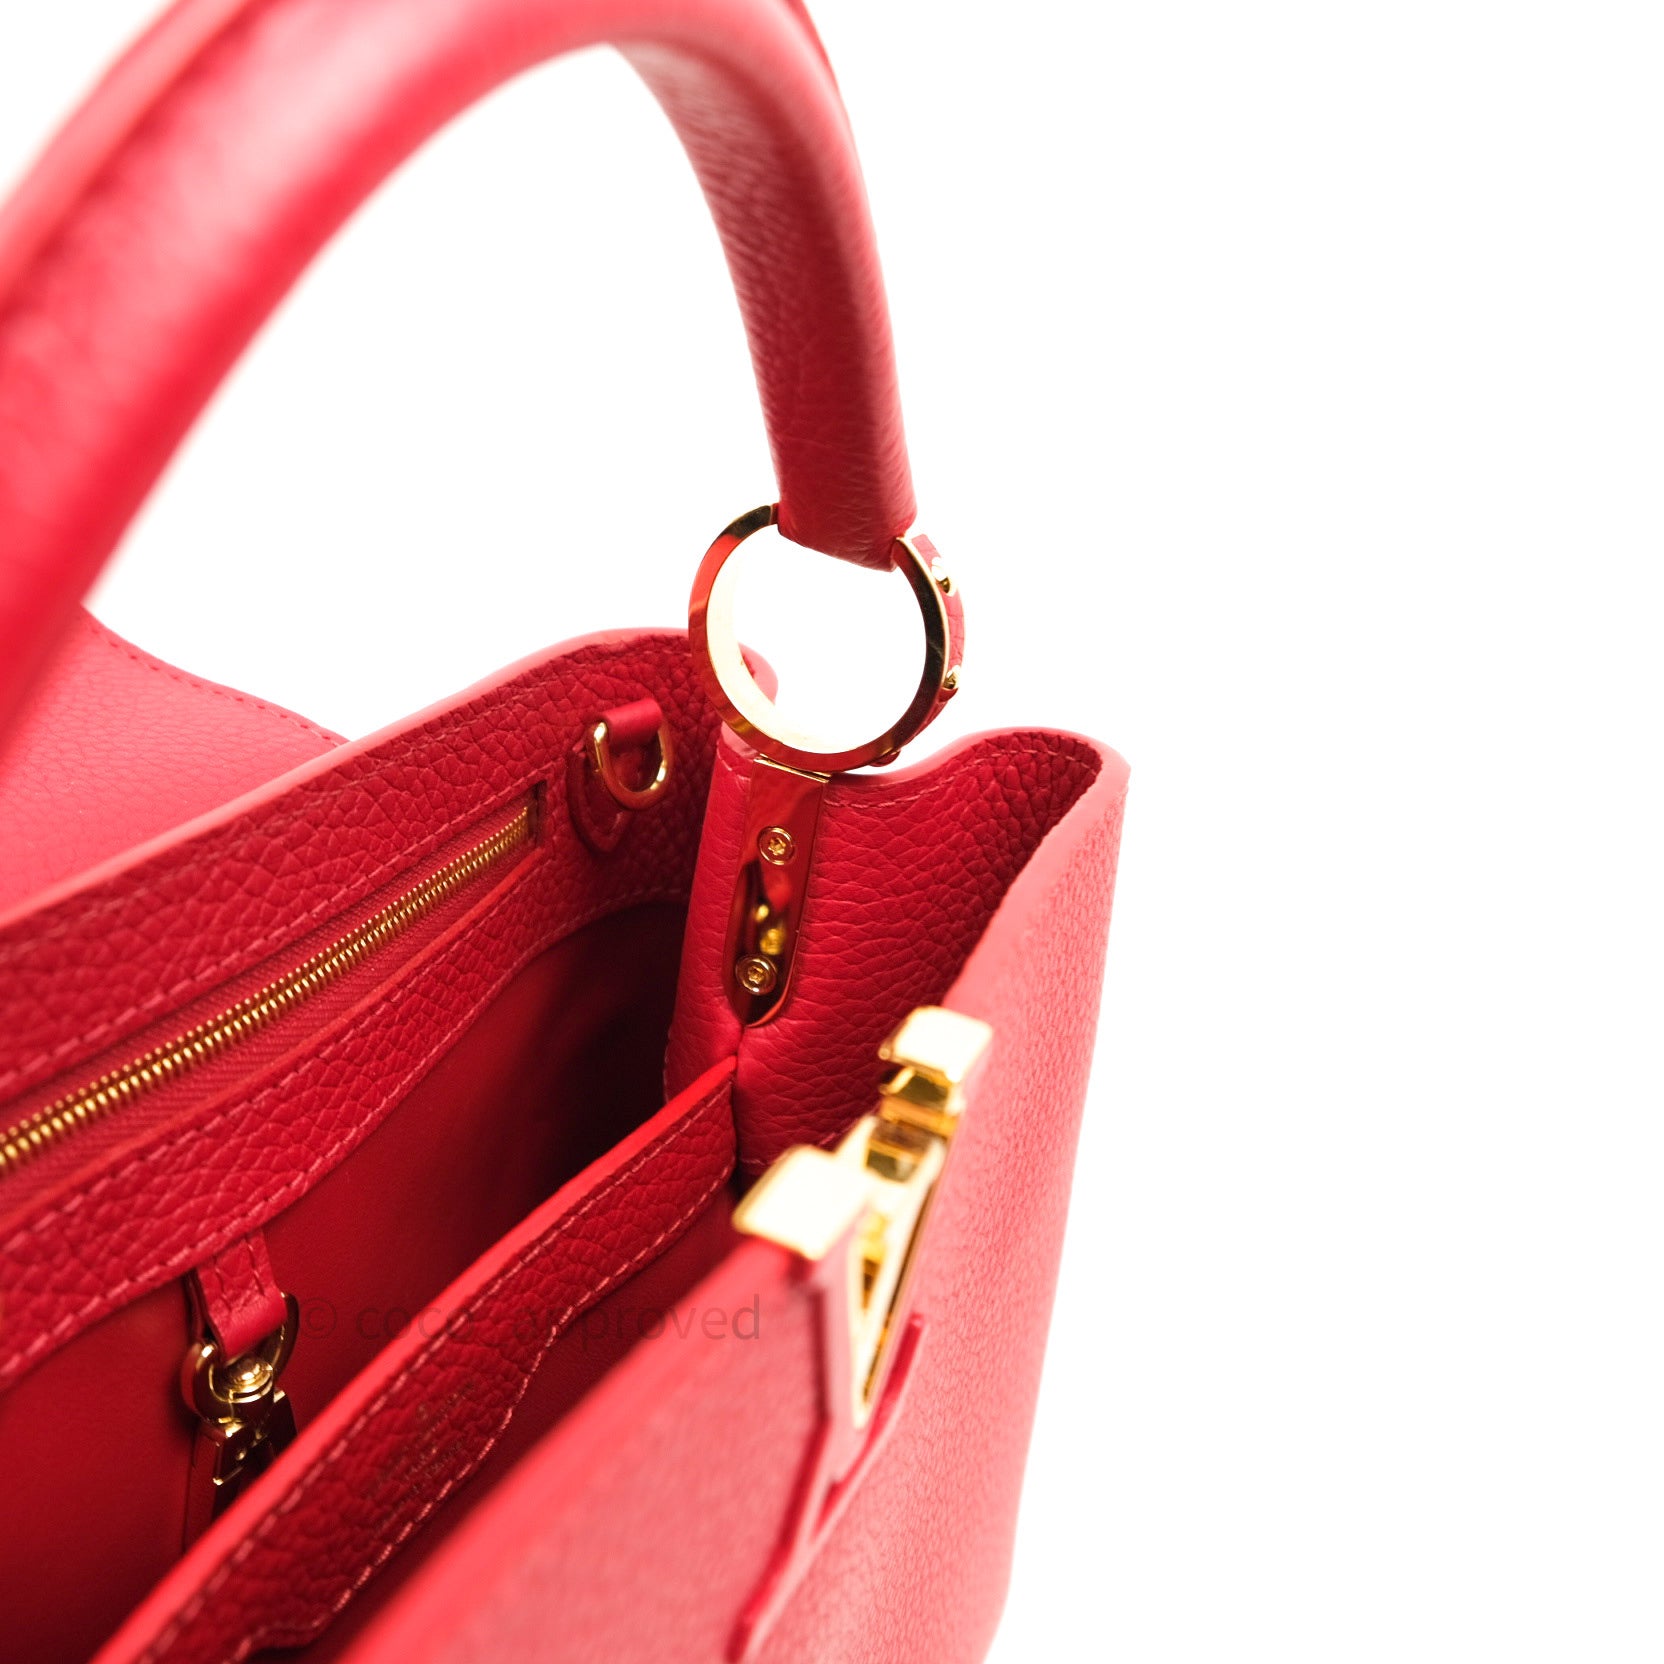 Louis Vuitton Red Taurillon Leather Alma ppm 1lvs523k